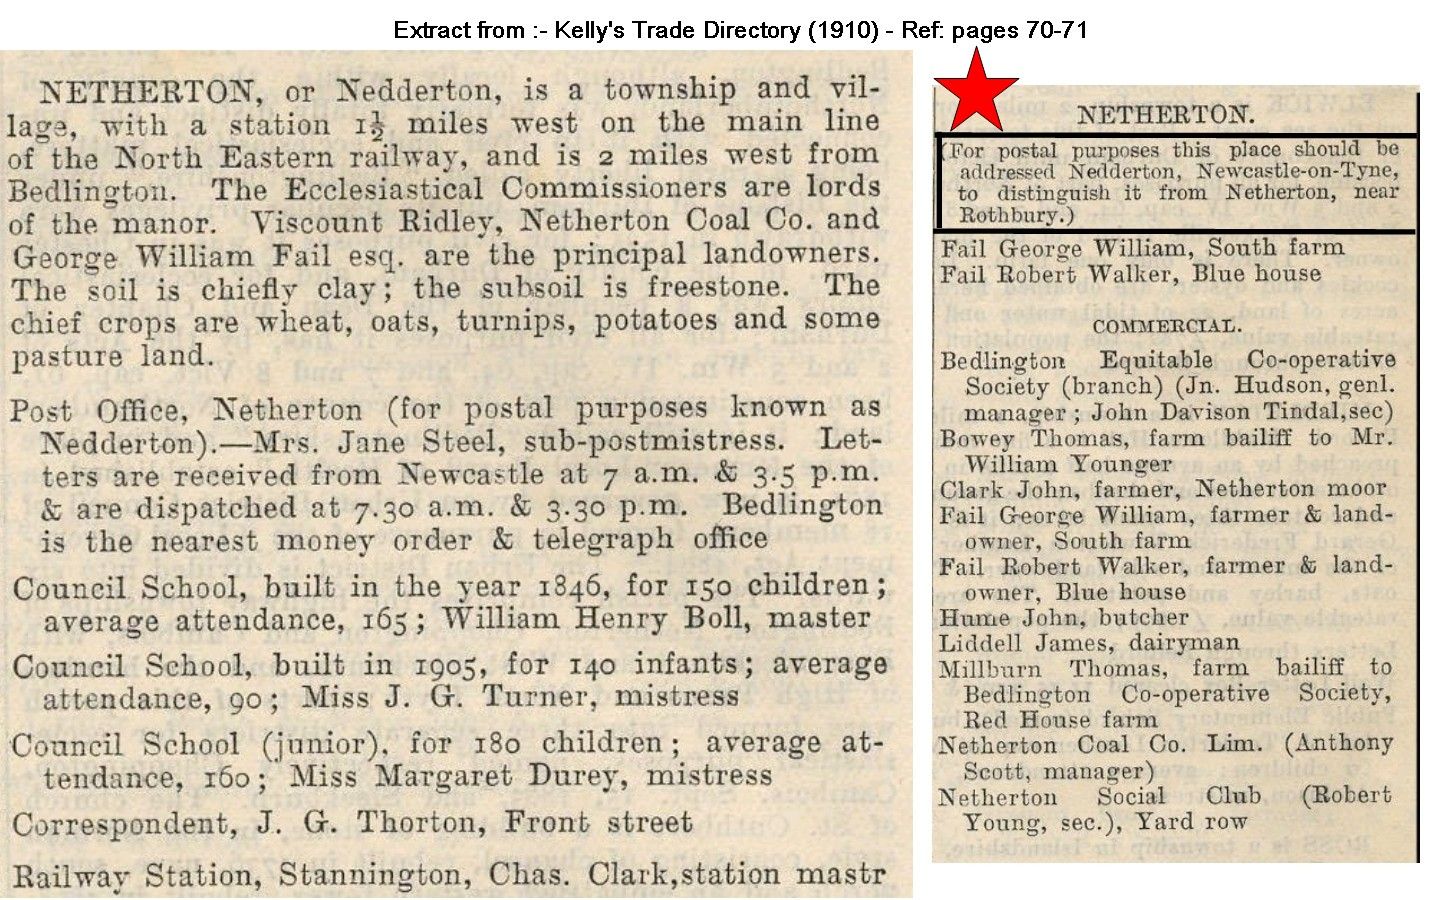 Kellys Directory 1910 - Netherton = Nedderton